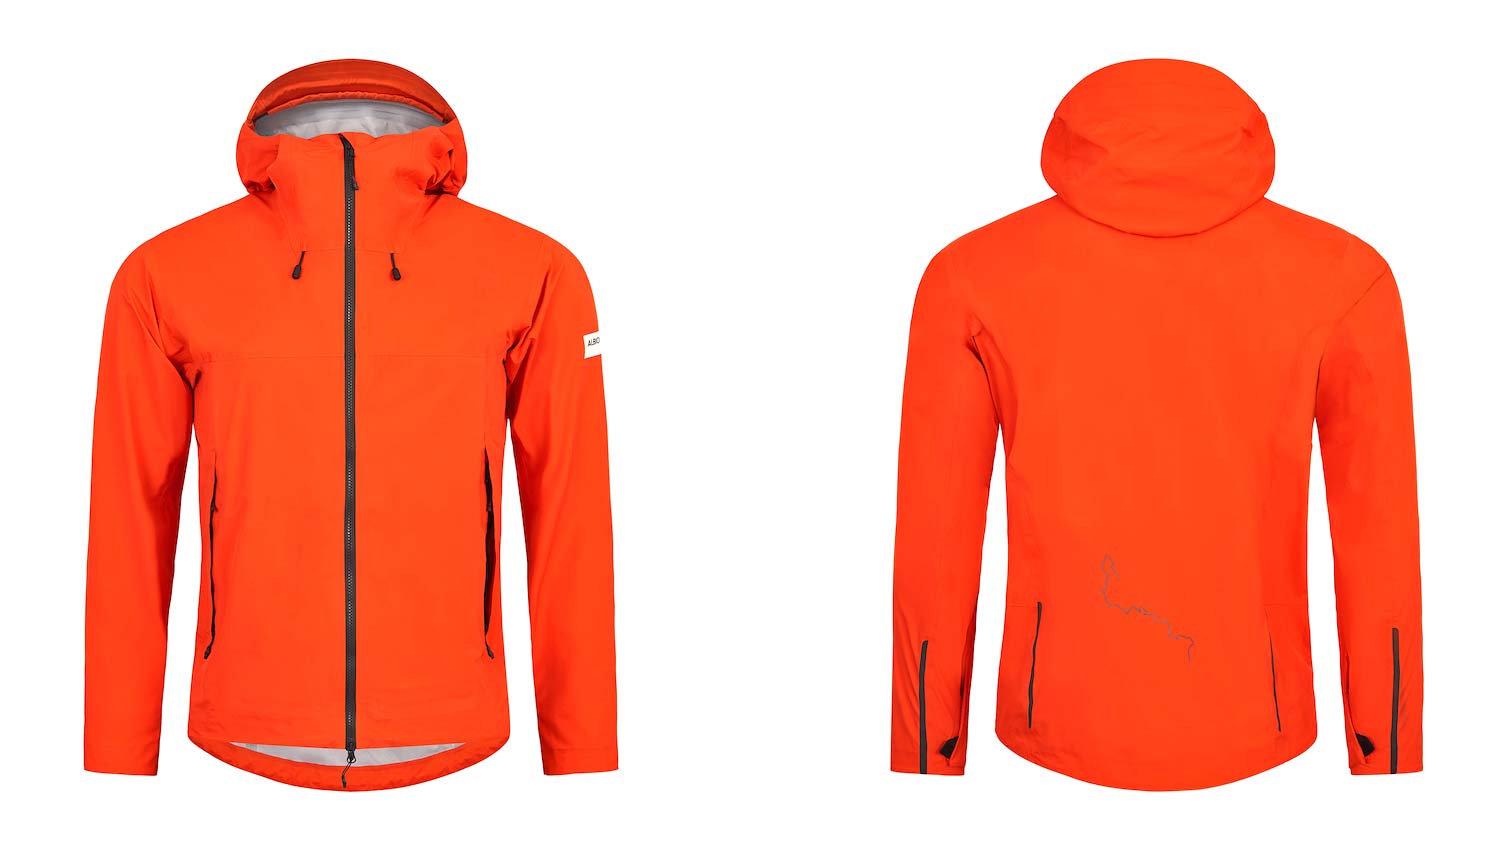 Albion Zoa Rain Shell, recycled Pertex fabrics, front & back in orange